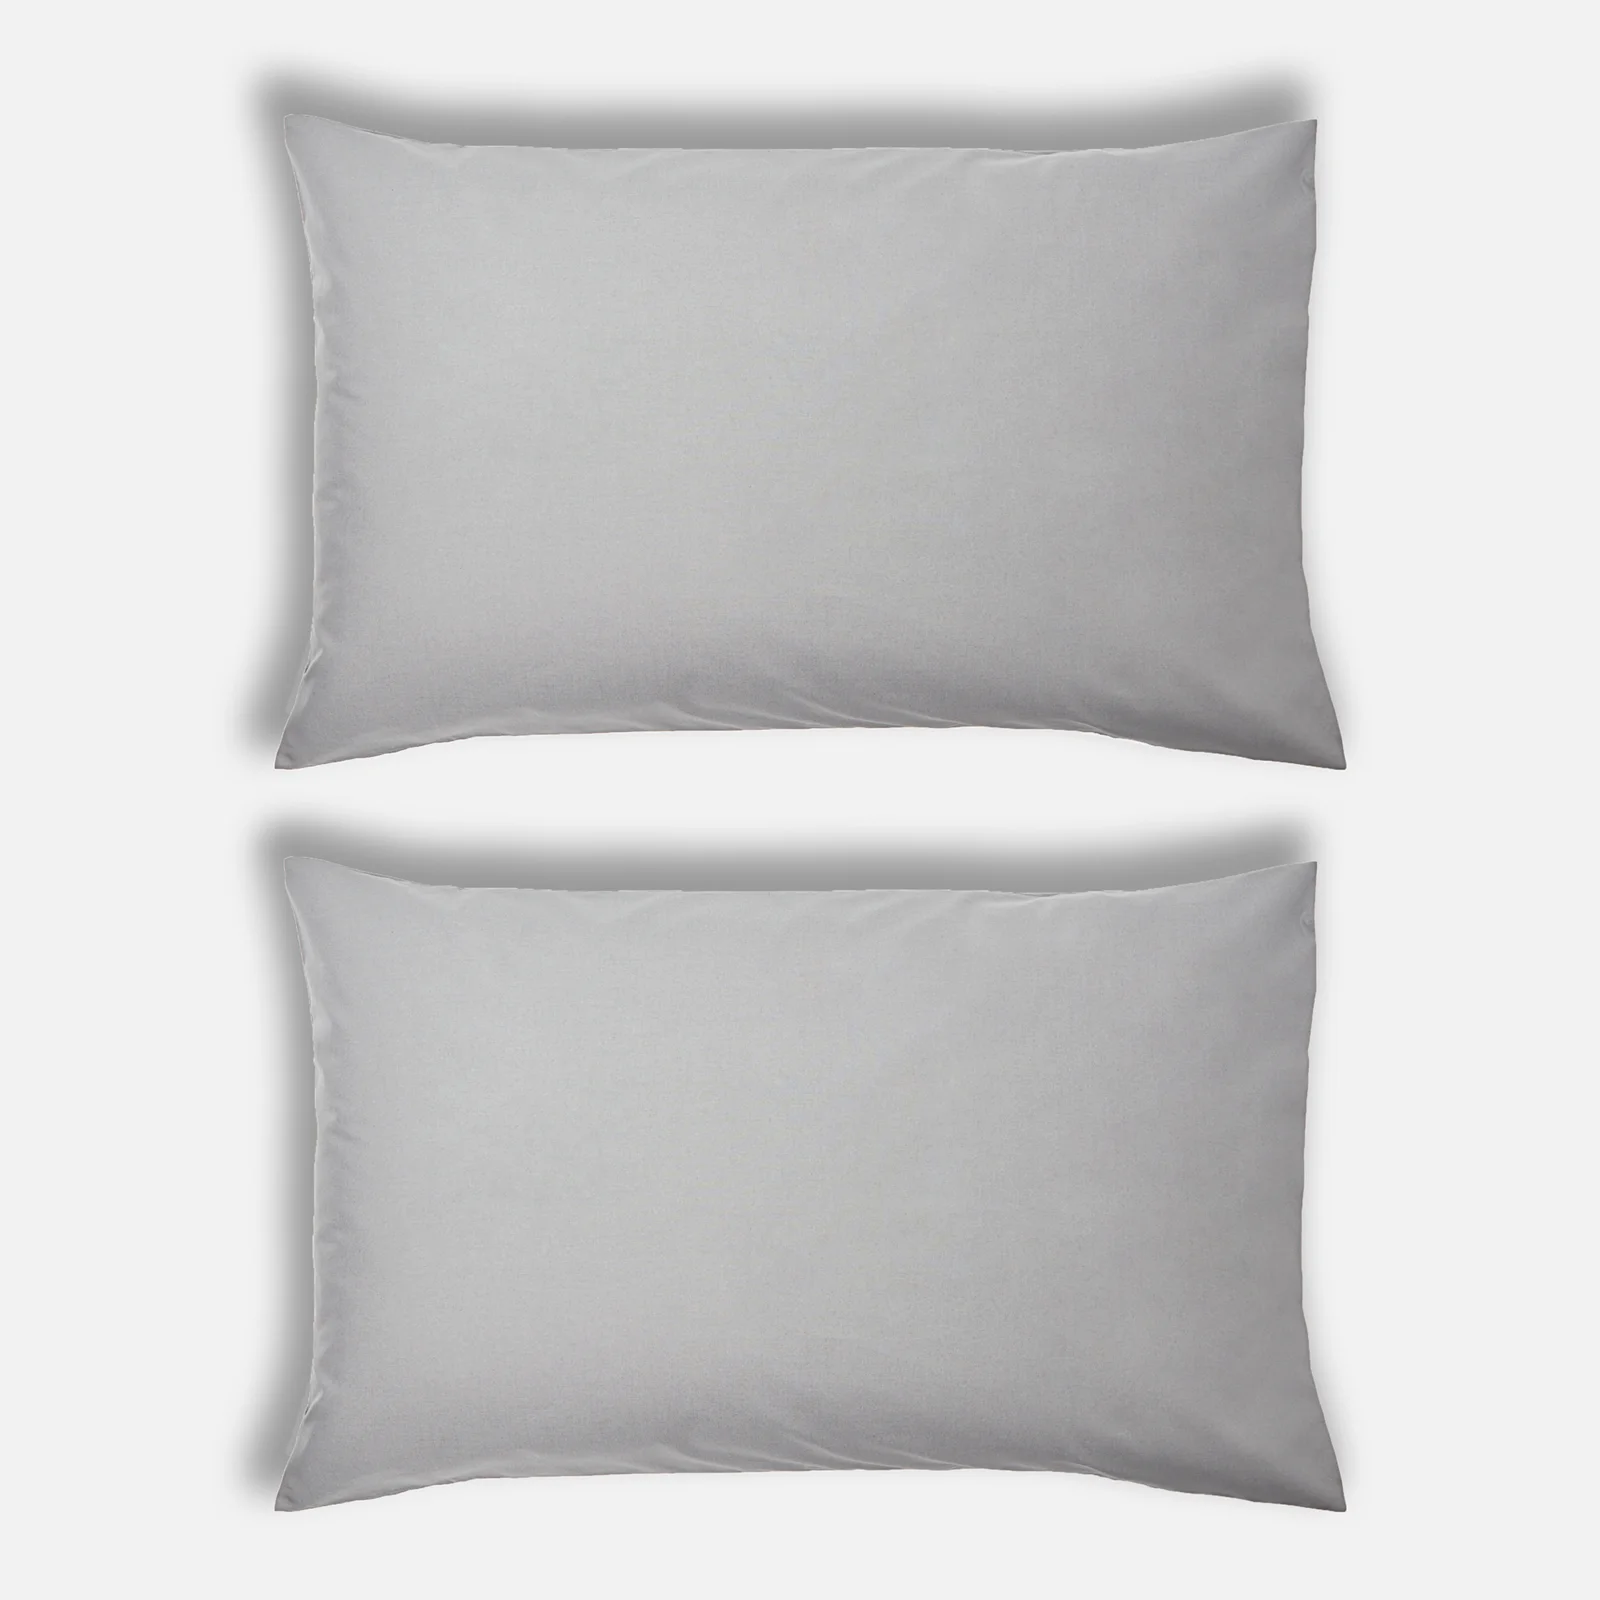 ïn home 200 Thread Count 100% Organic Cotton Pillowcase Pair - Dark Grey Image 1